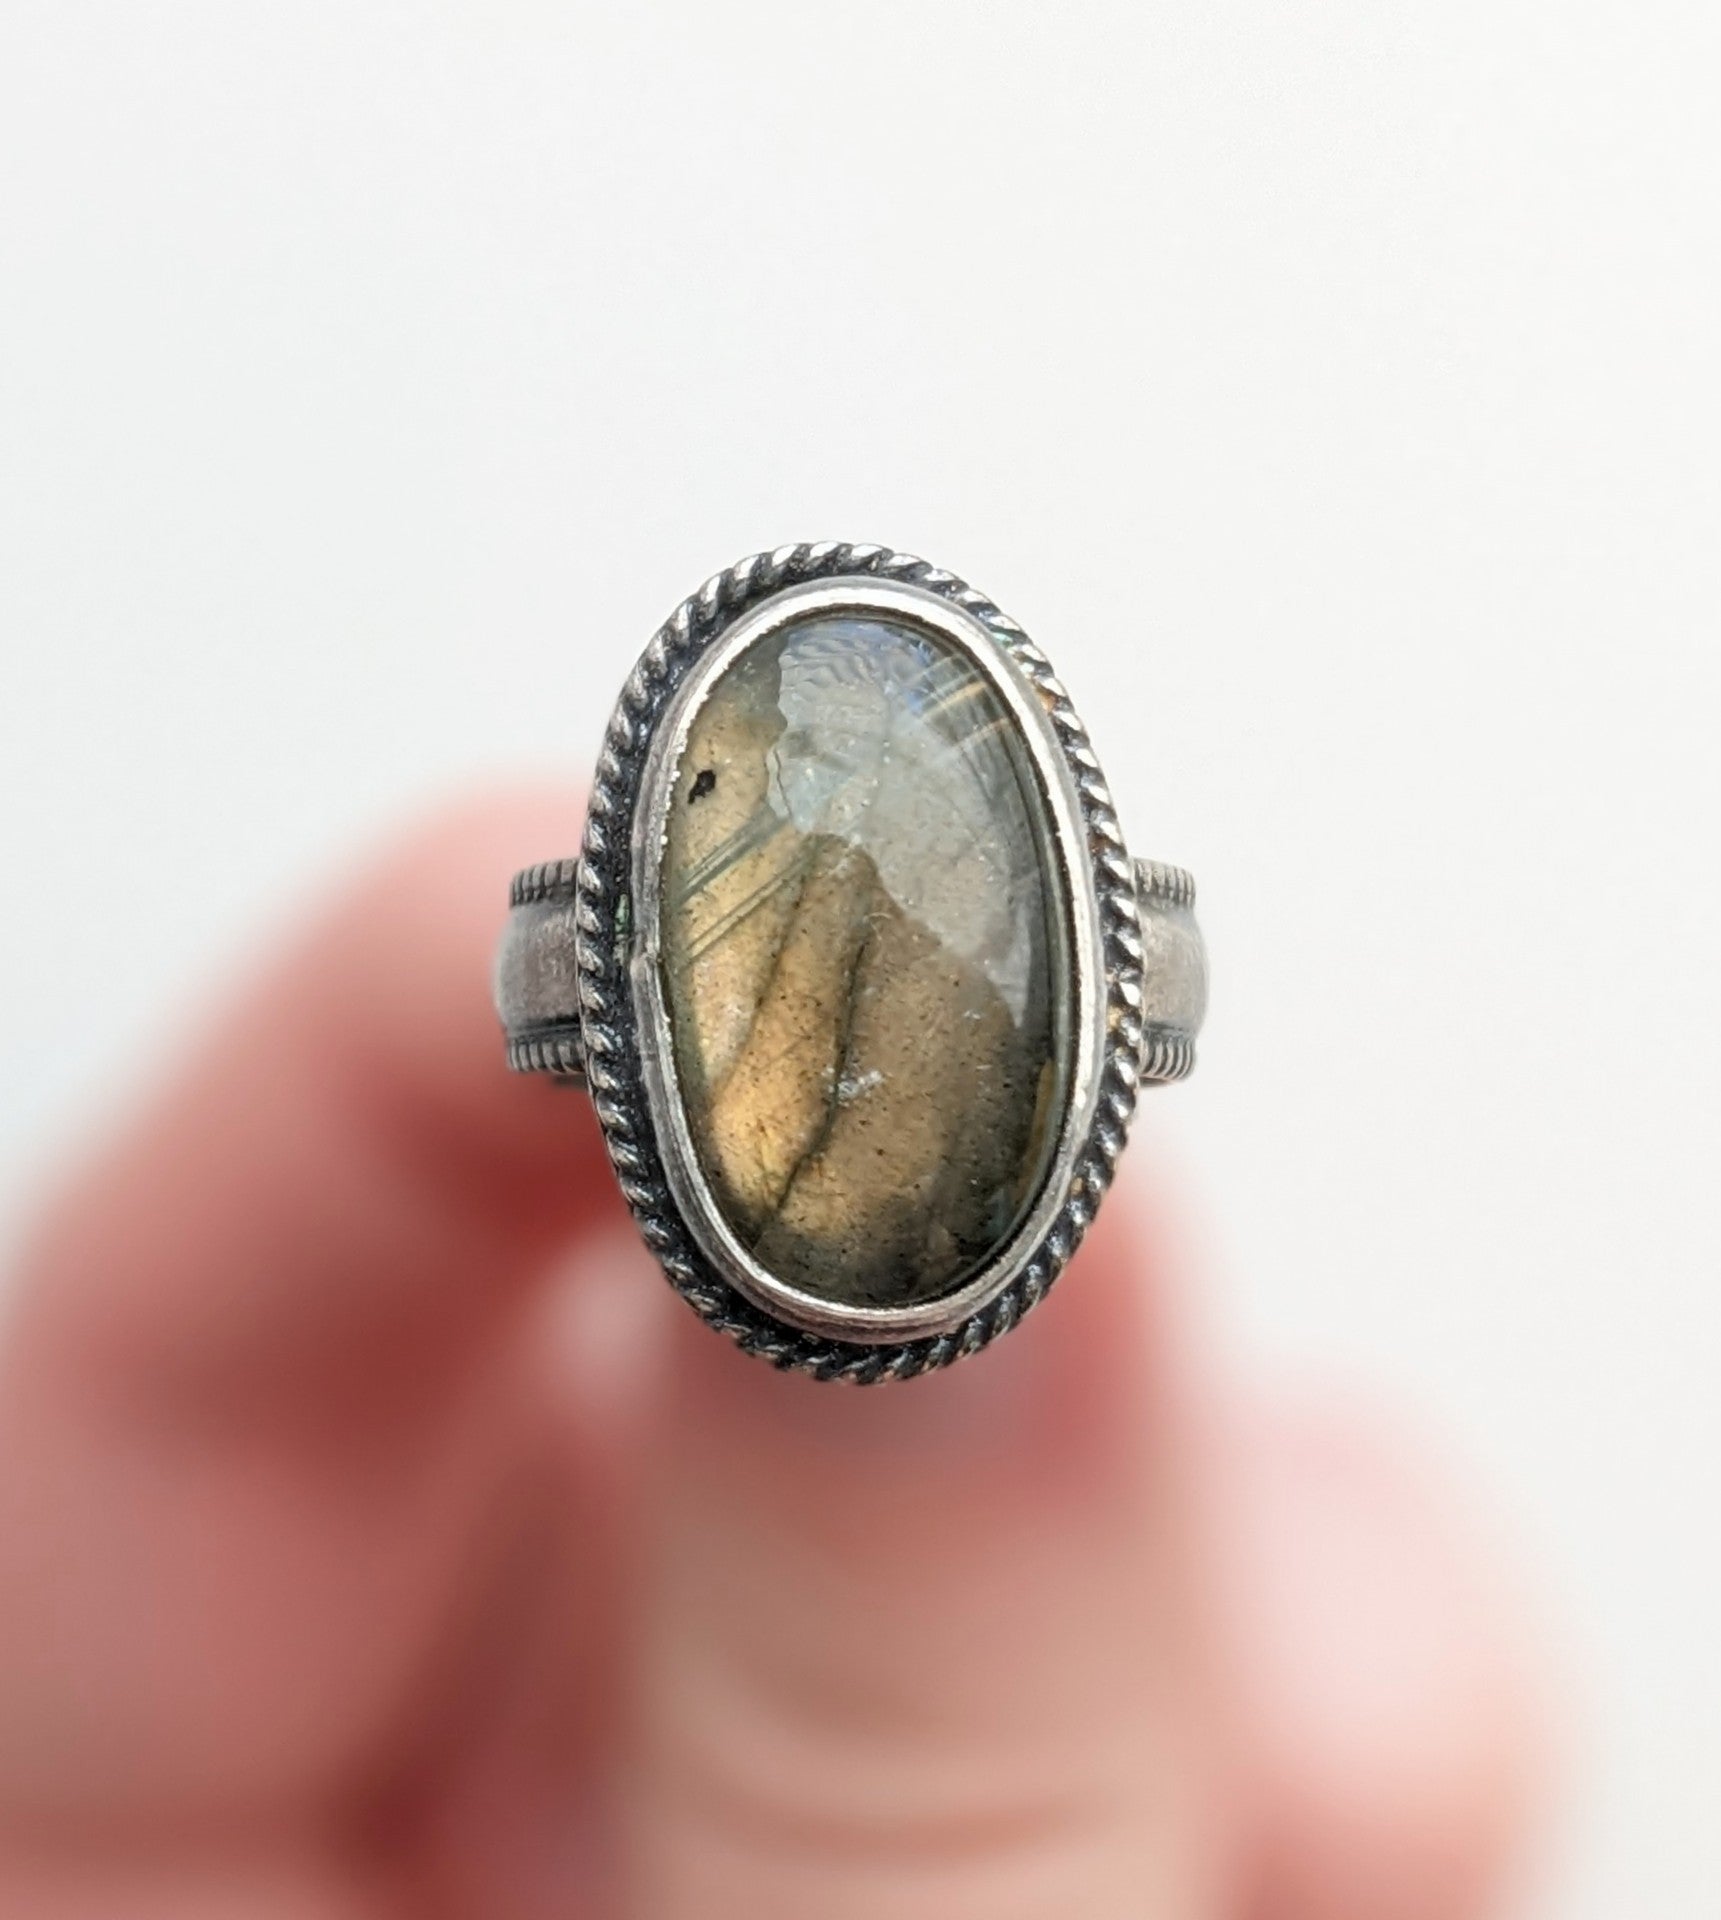 Sterling Silver Labradorite Ring Size 6 US